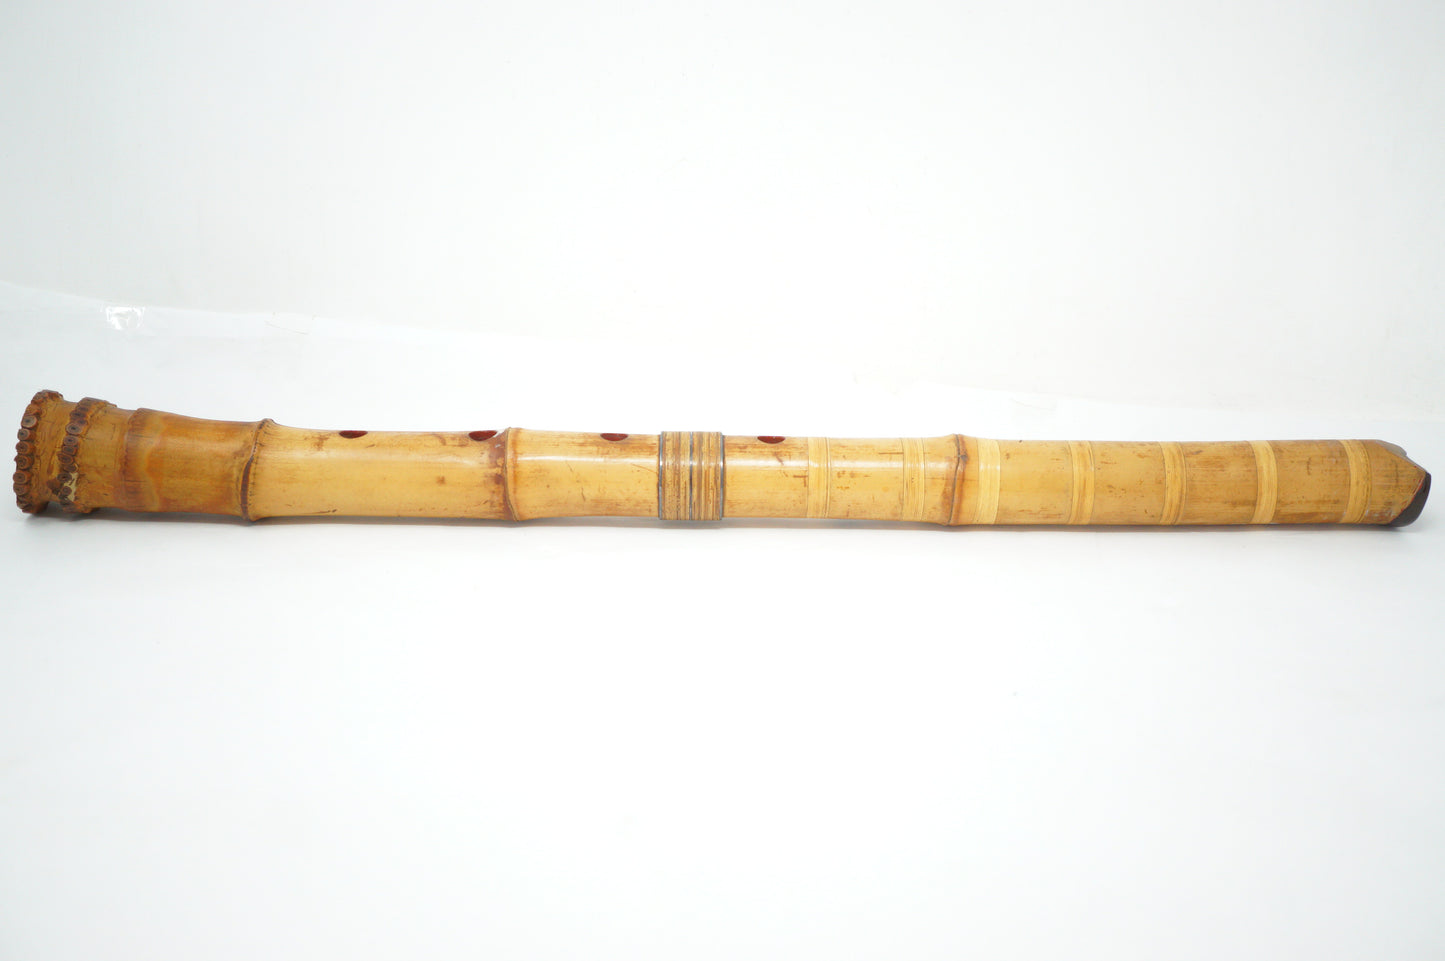 Japanese Shakuhachi Bamboo Flute Signed Original Vintage Instrument from Japan 1208D4